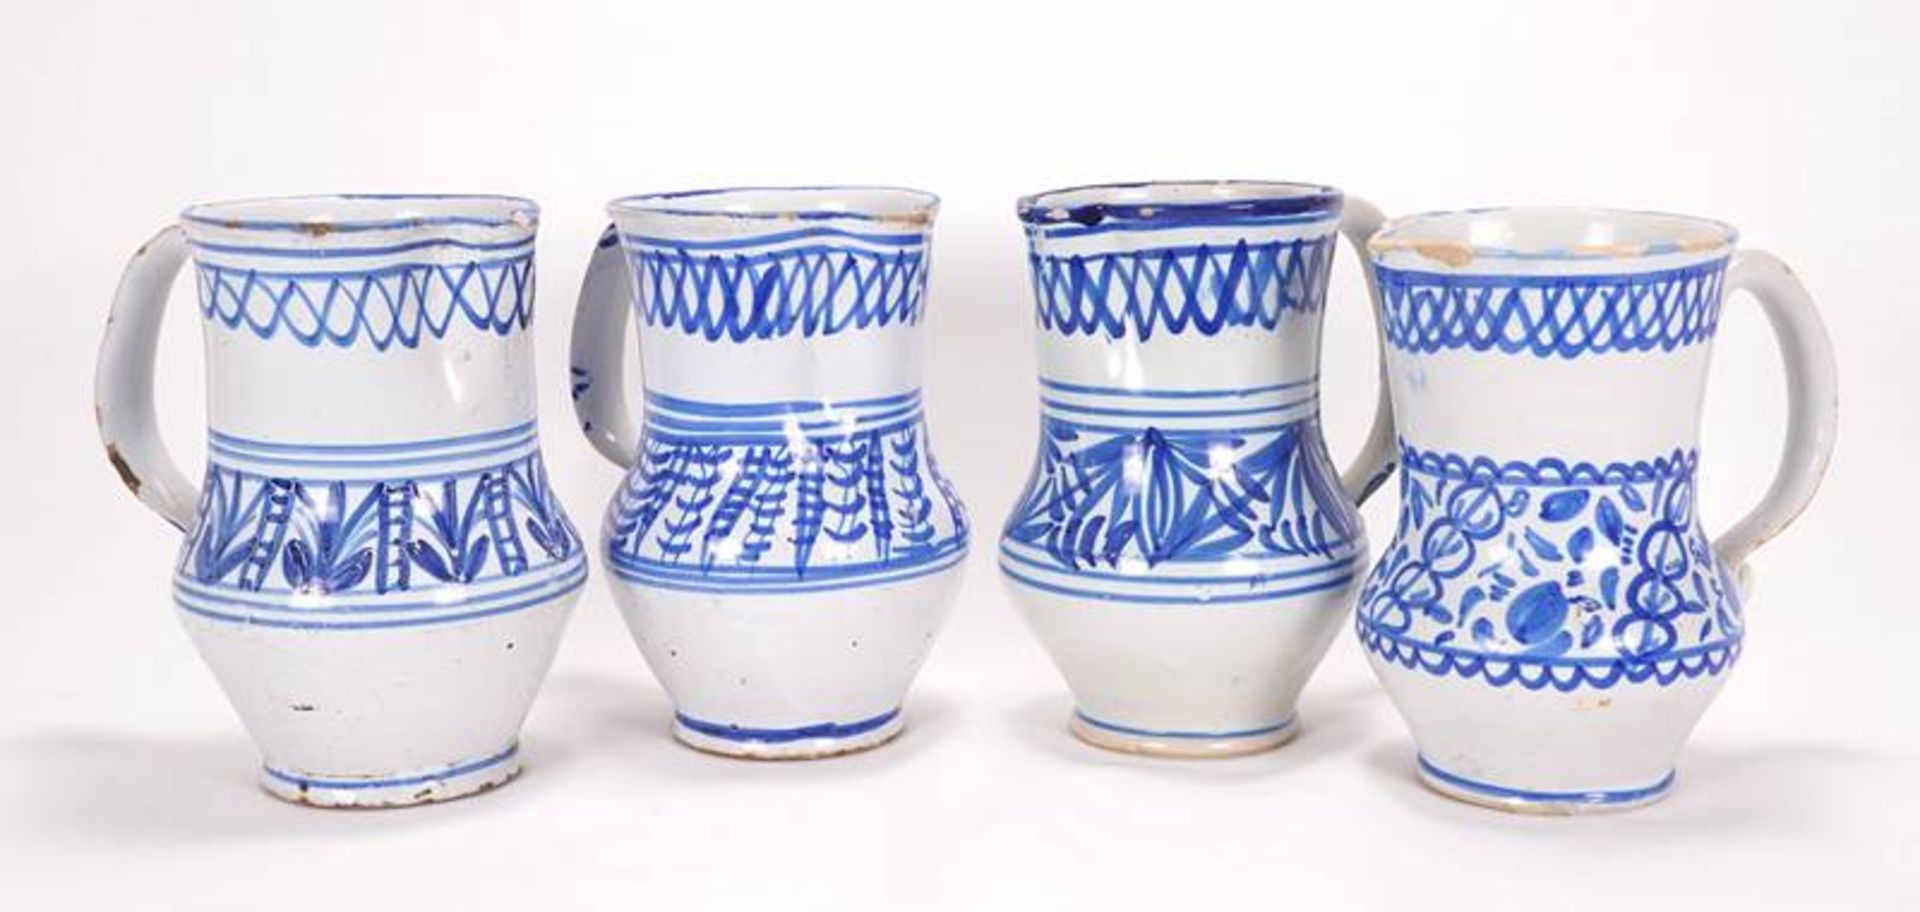 4 ceramic jugs